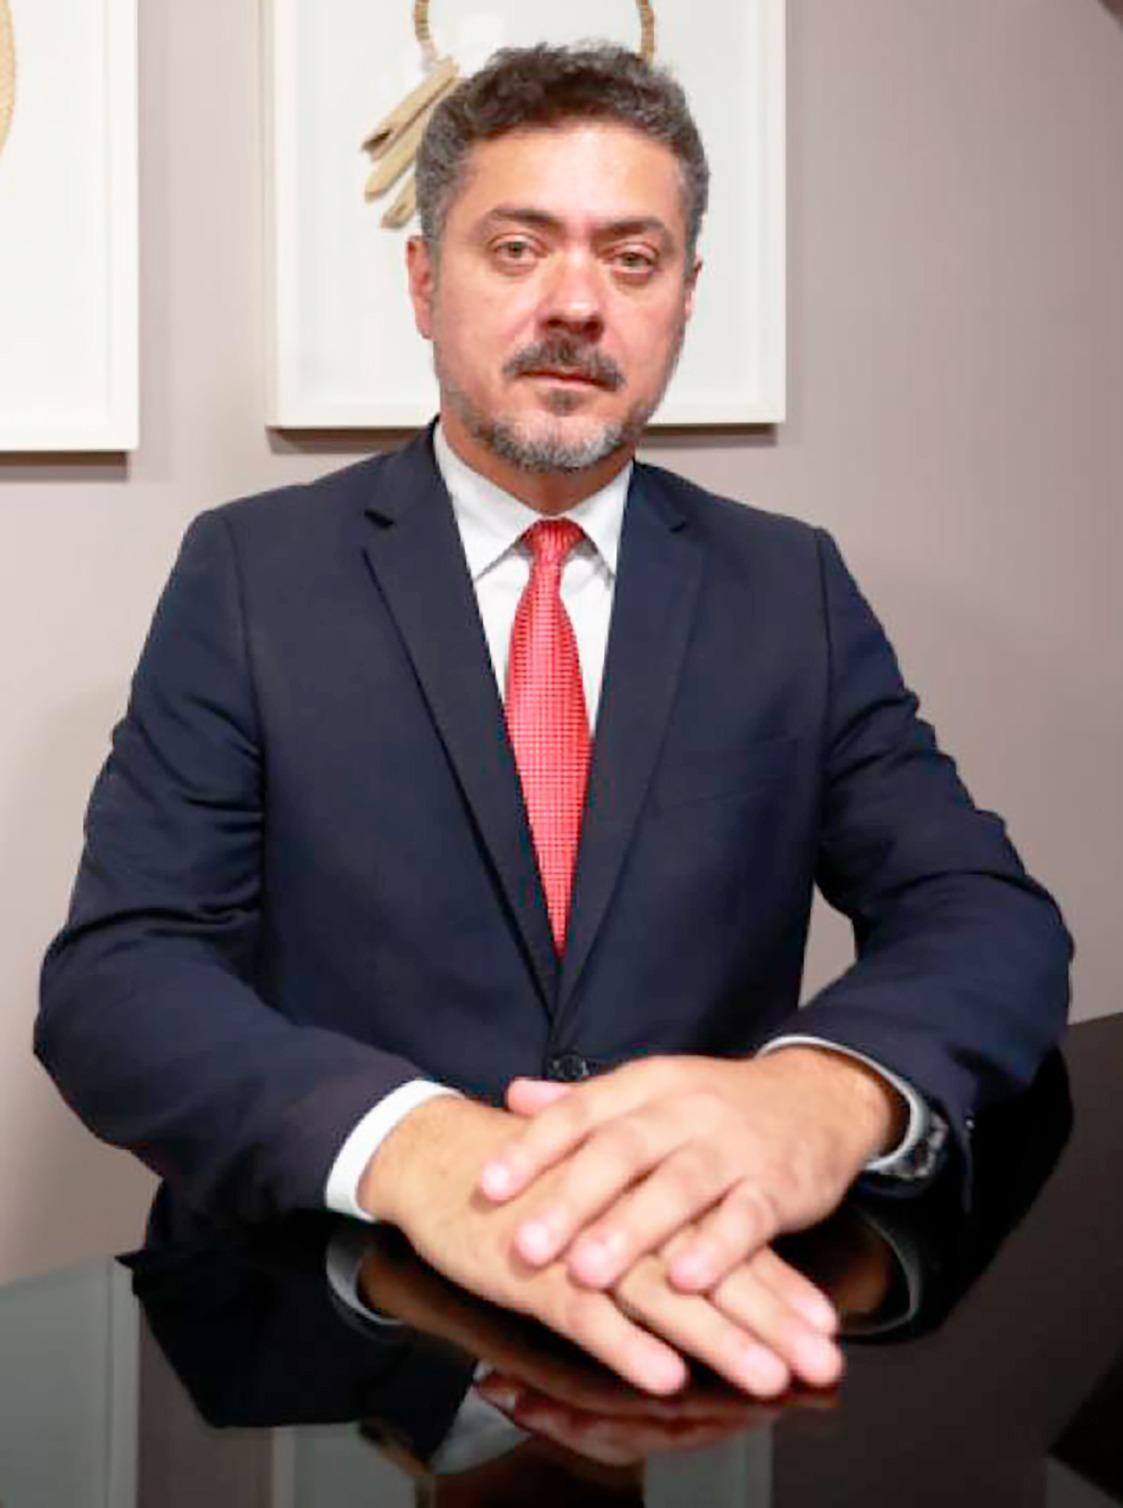 Advogado Joab Ribeiro Costa, de 52 anos